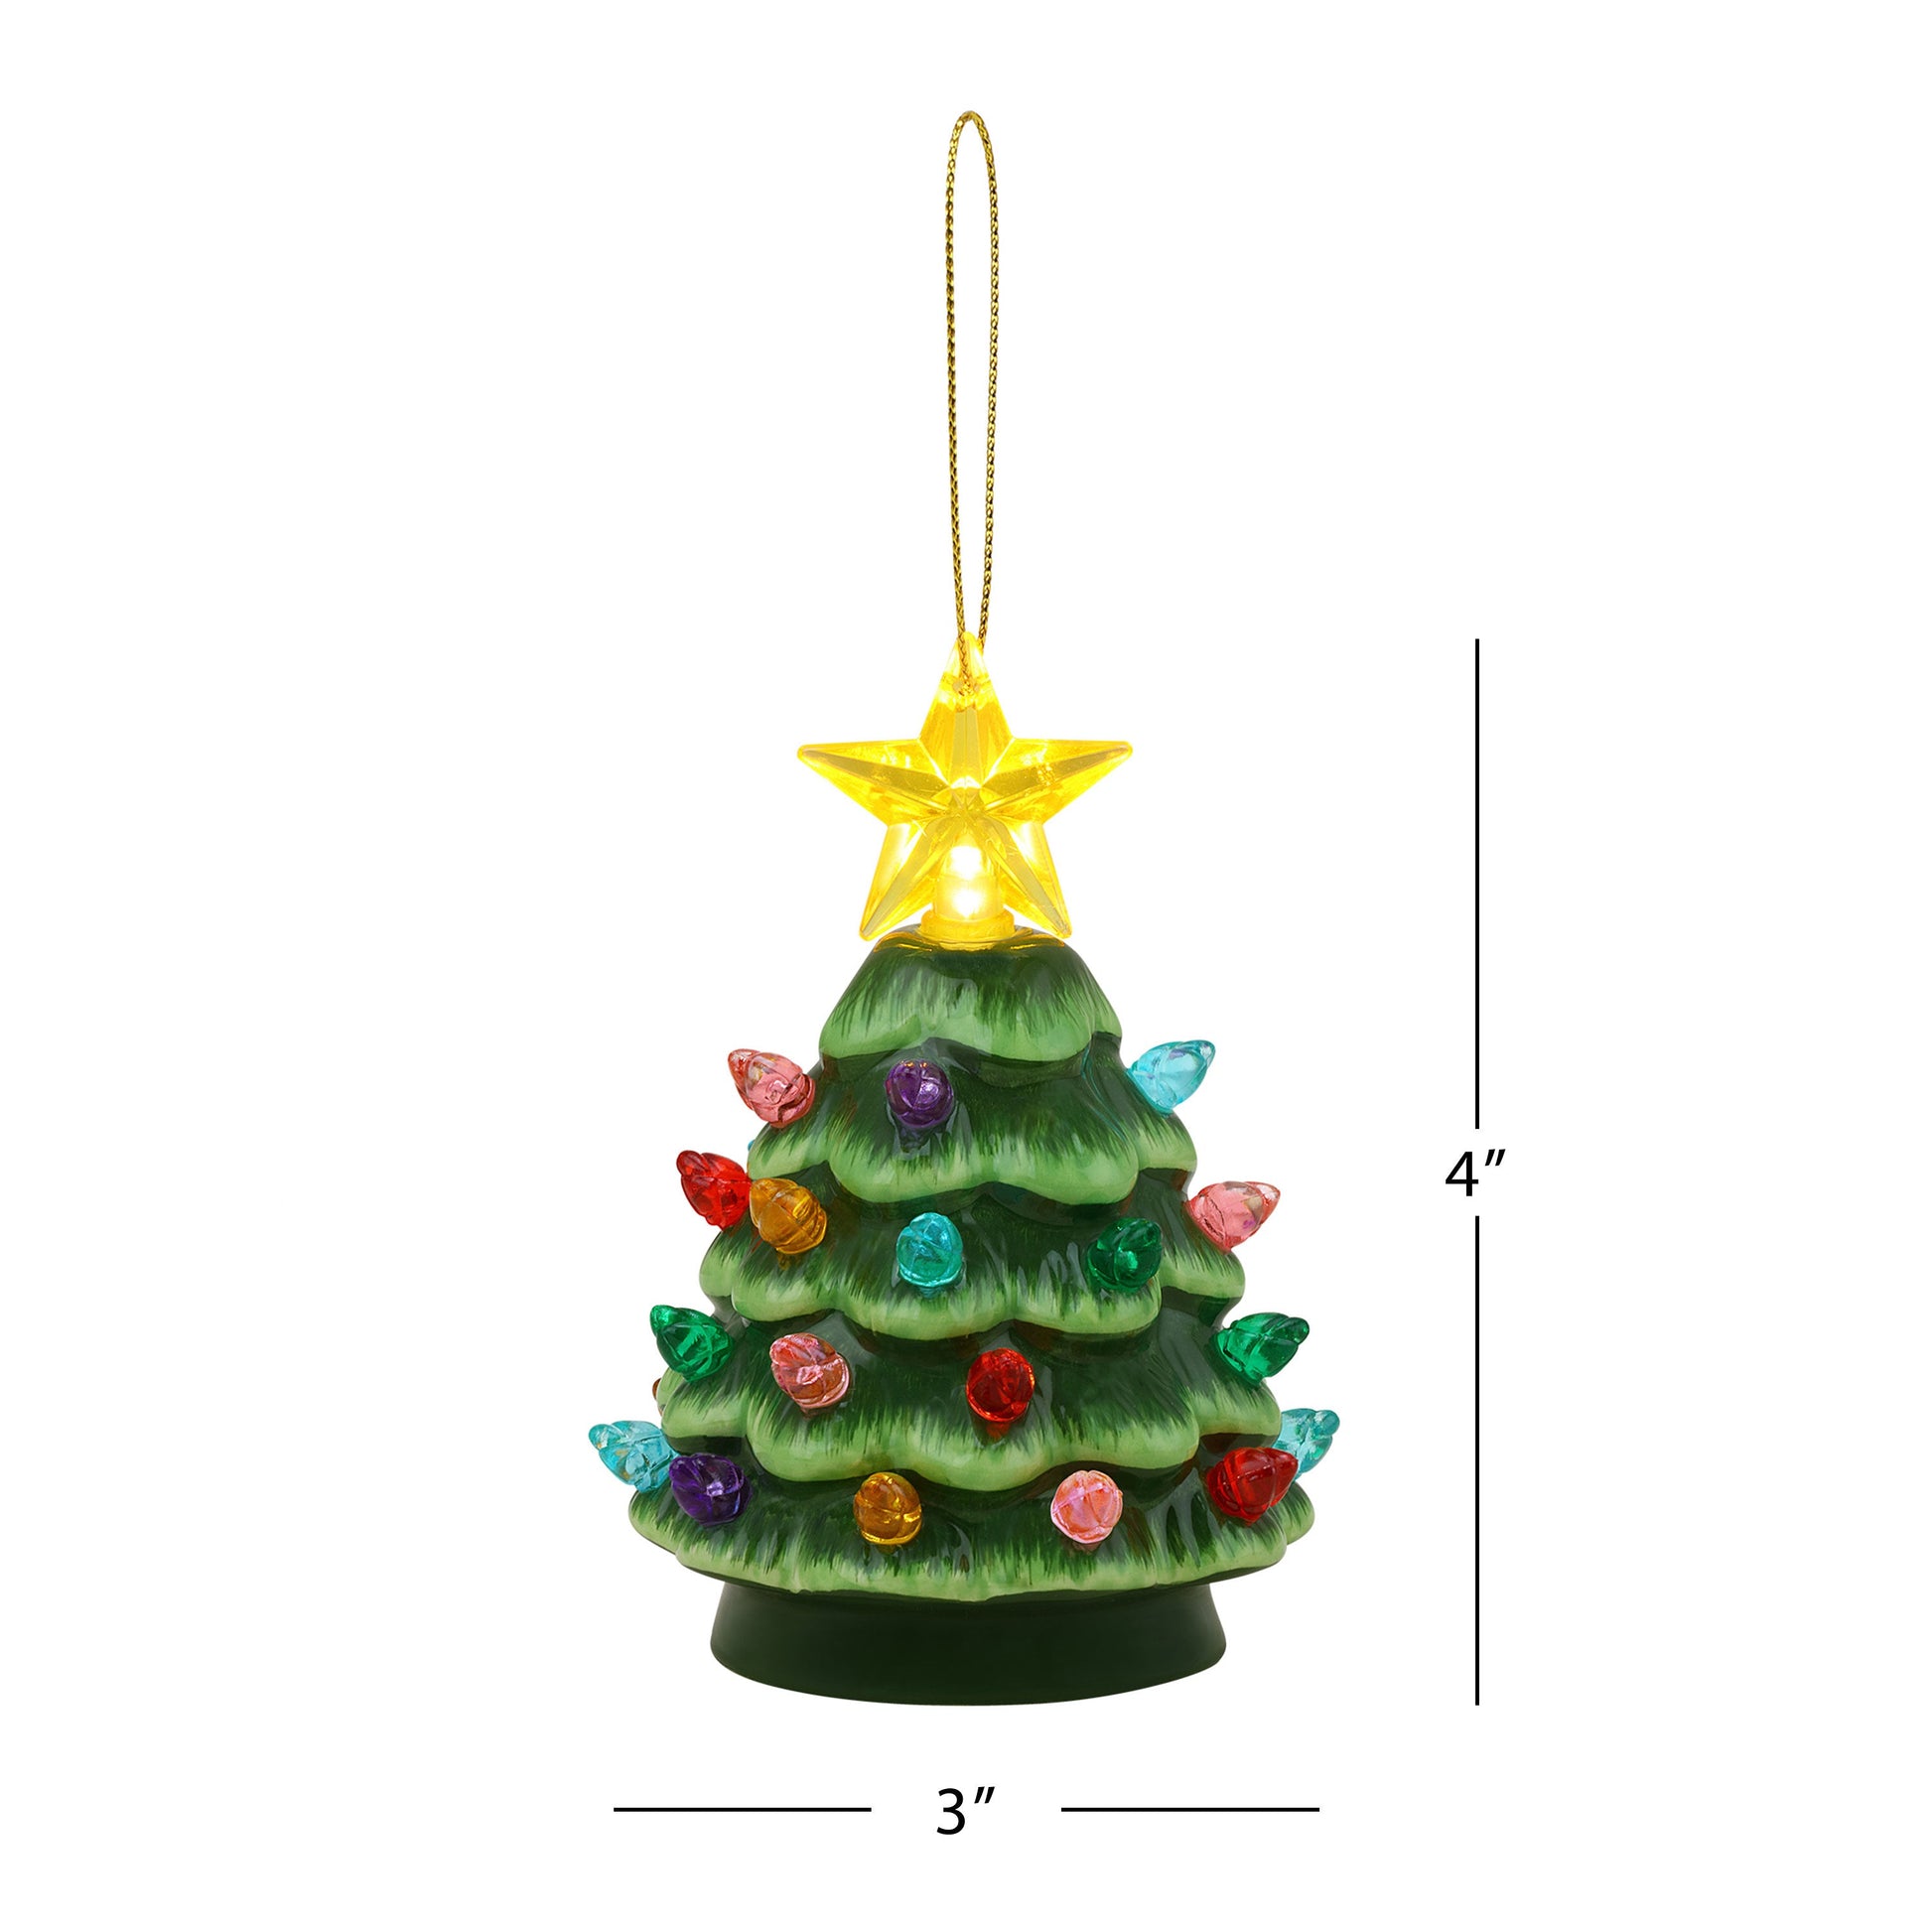 4" Set of 3 Nostalgic Ceramic Lit Tree Ornaments - Green, Light Blue, Seafoam - Mr. Christmas